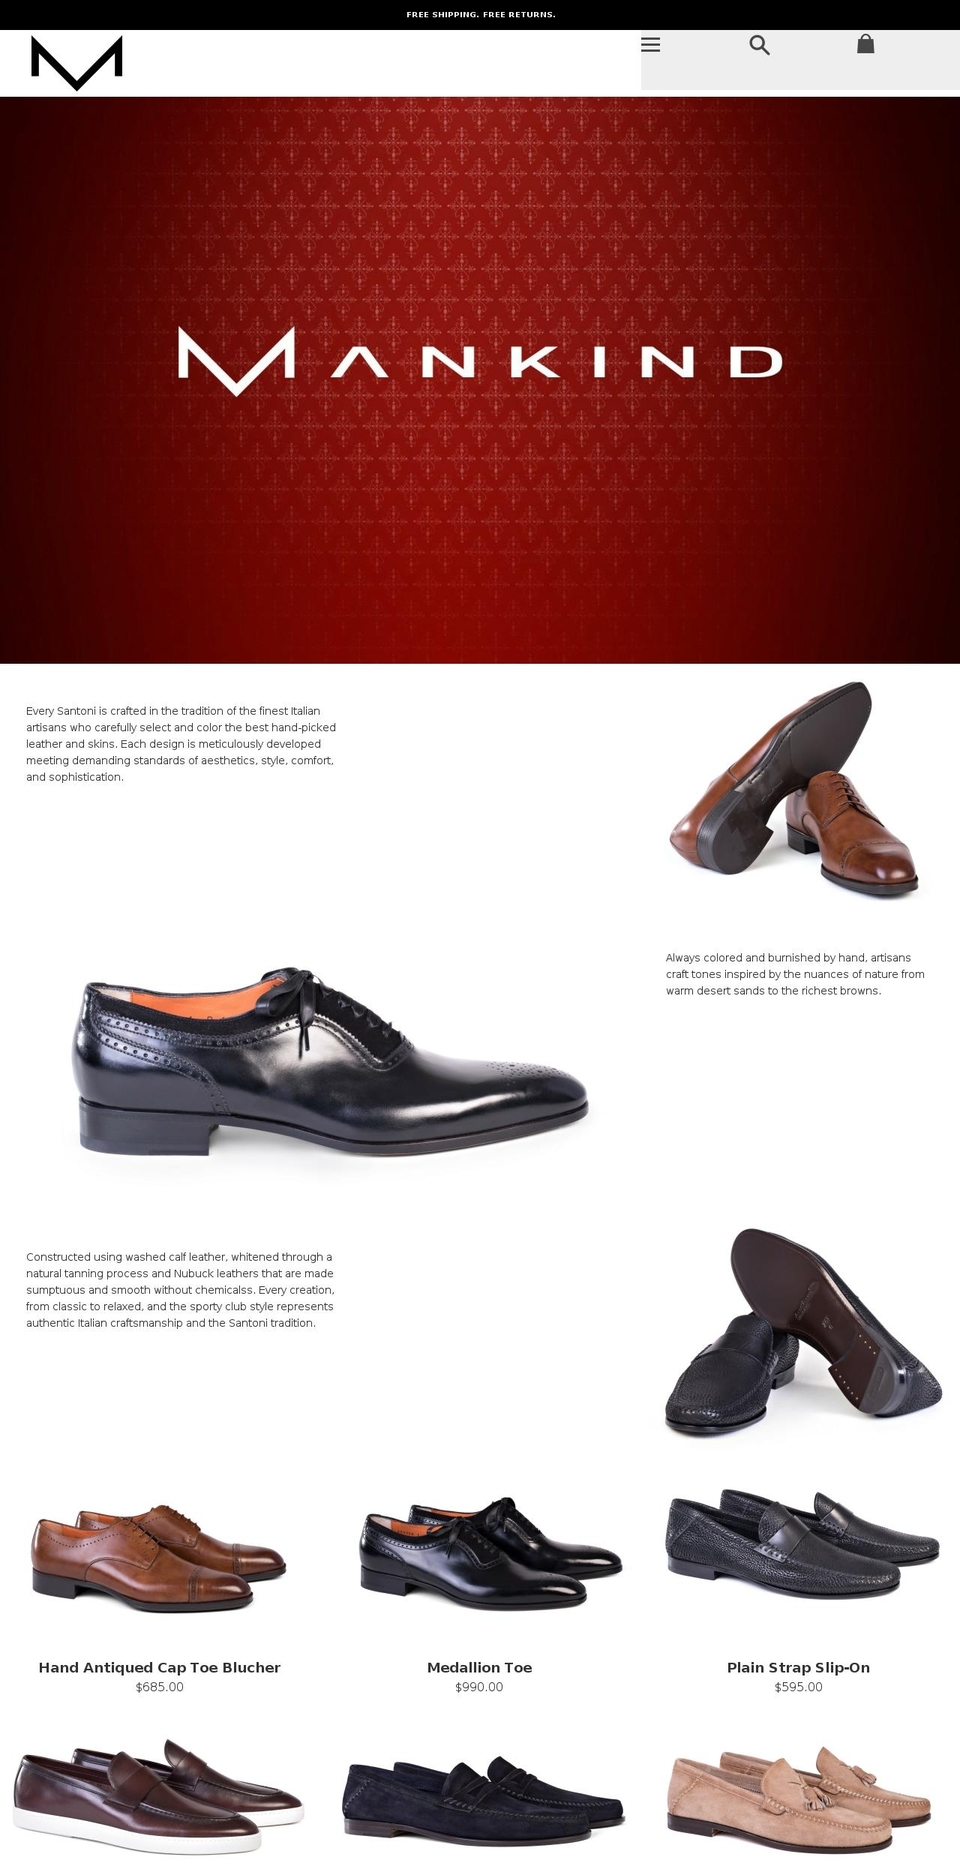 mankindshoes.com shopify website screenshot